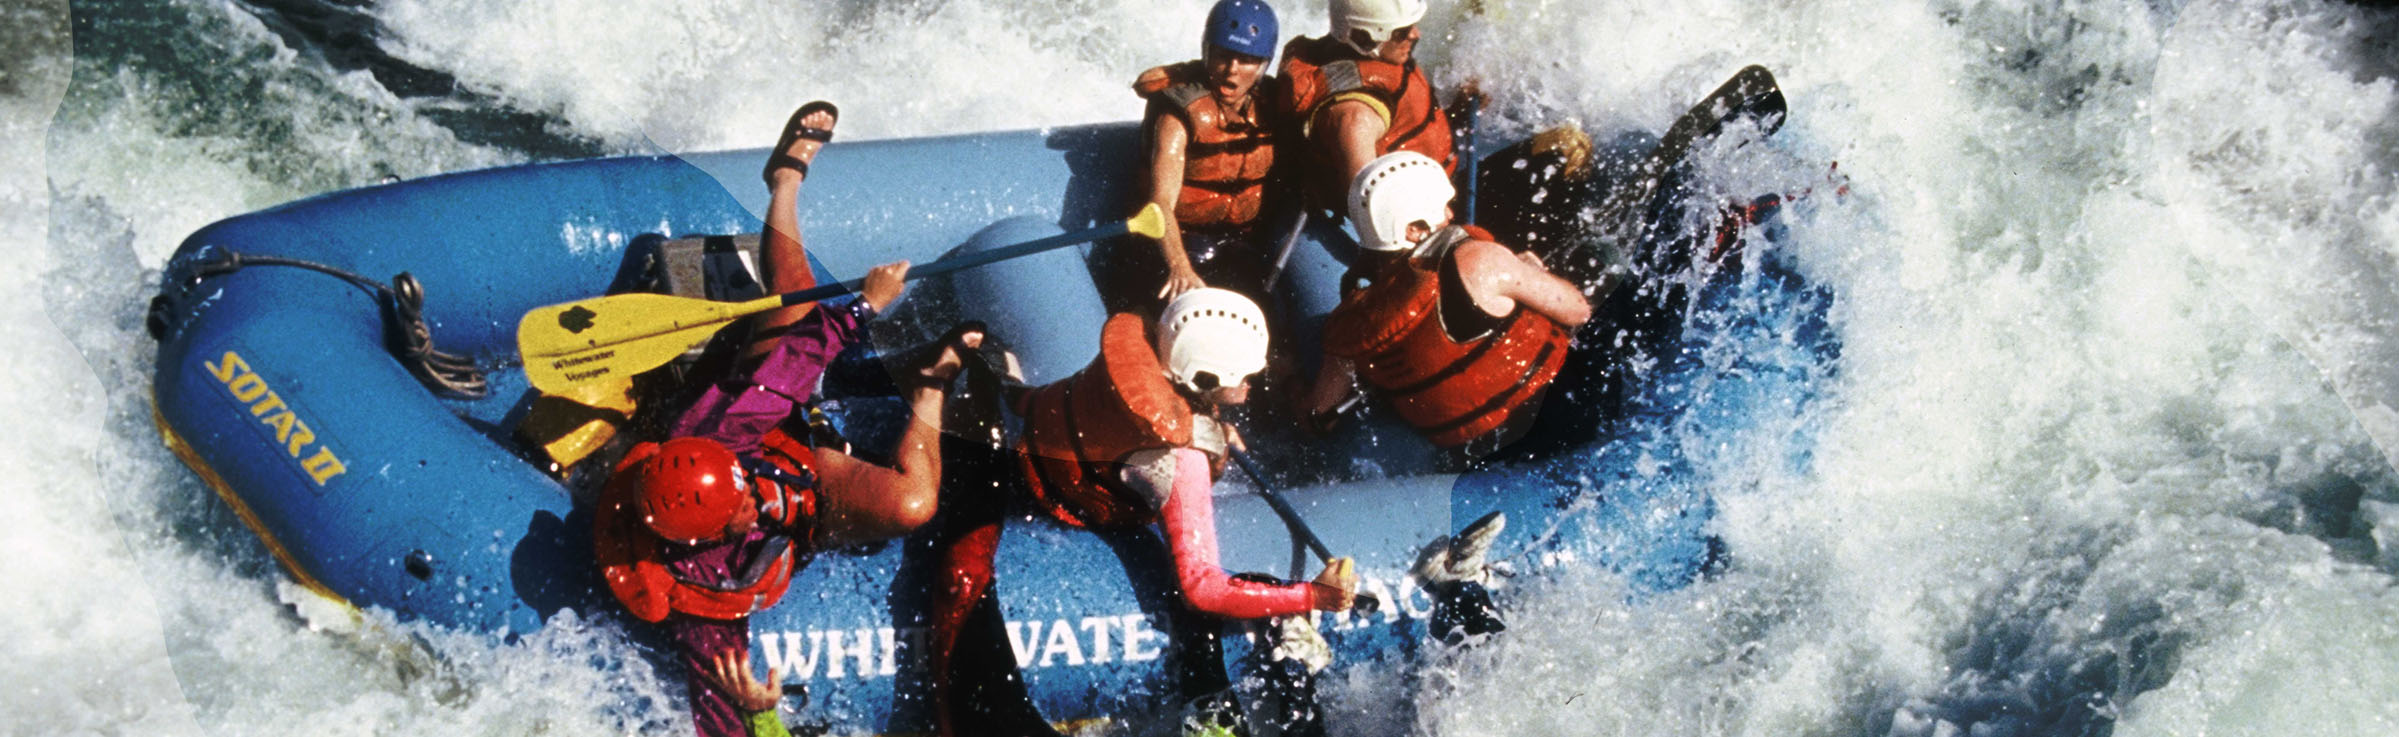 people whitewater rafting in big rapids